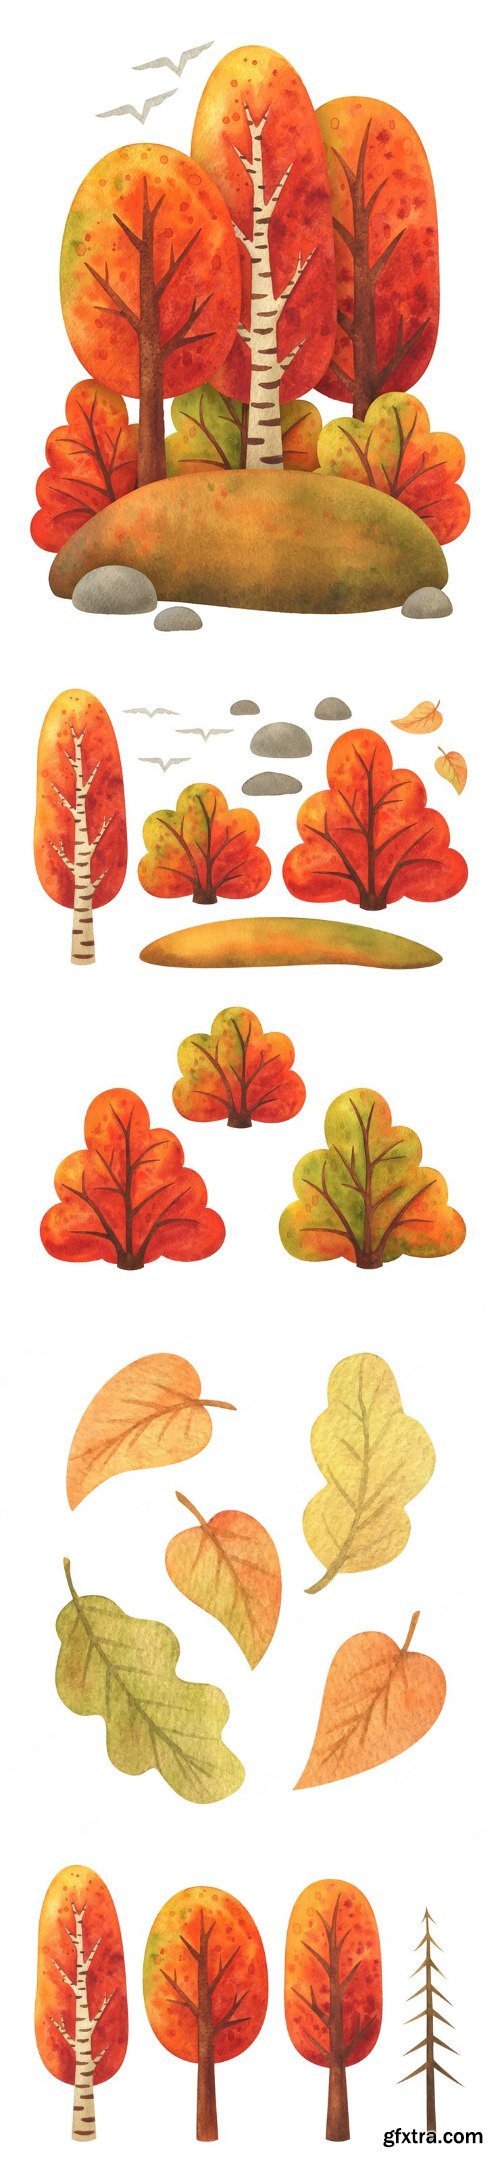 Autumn nature clipart watercolor illustrations